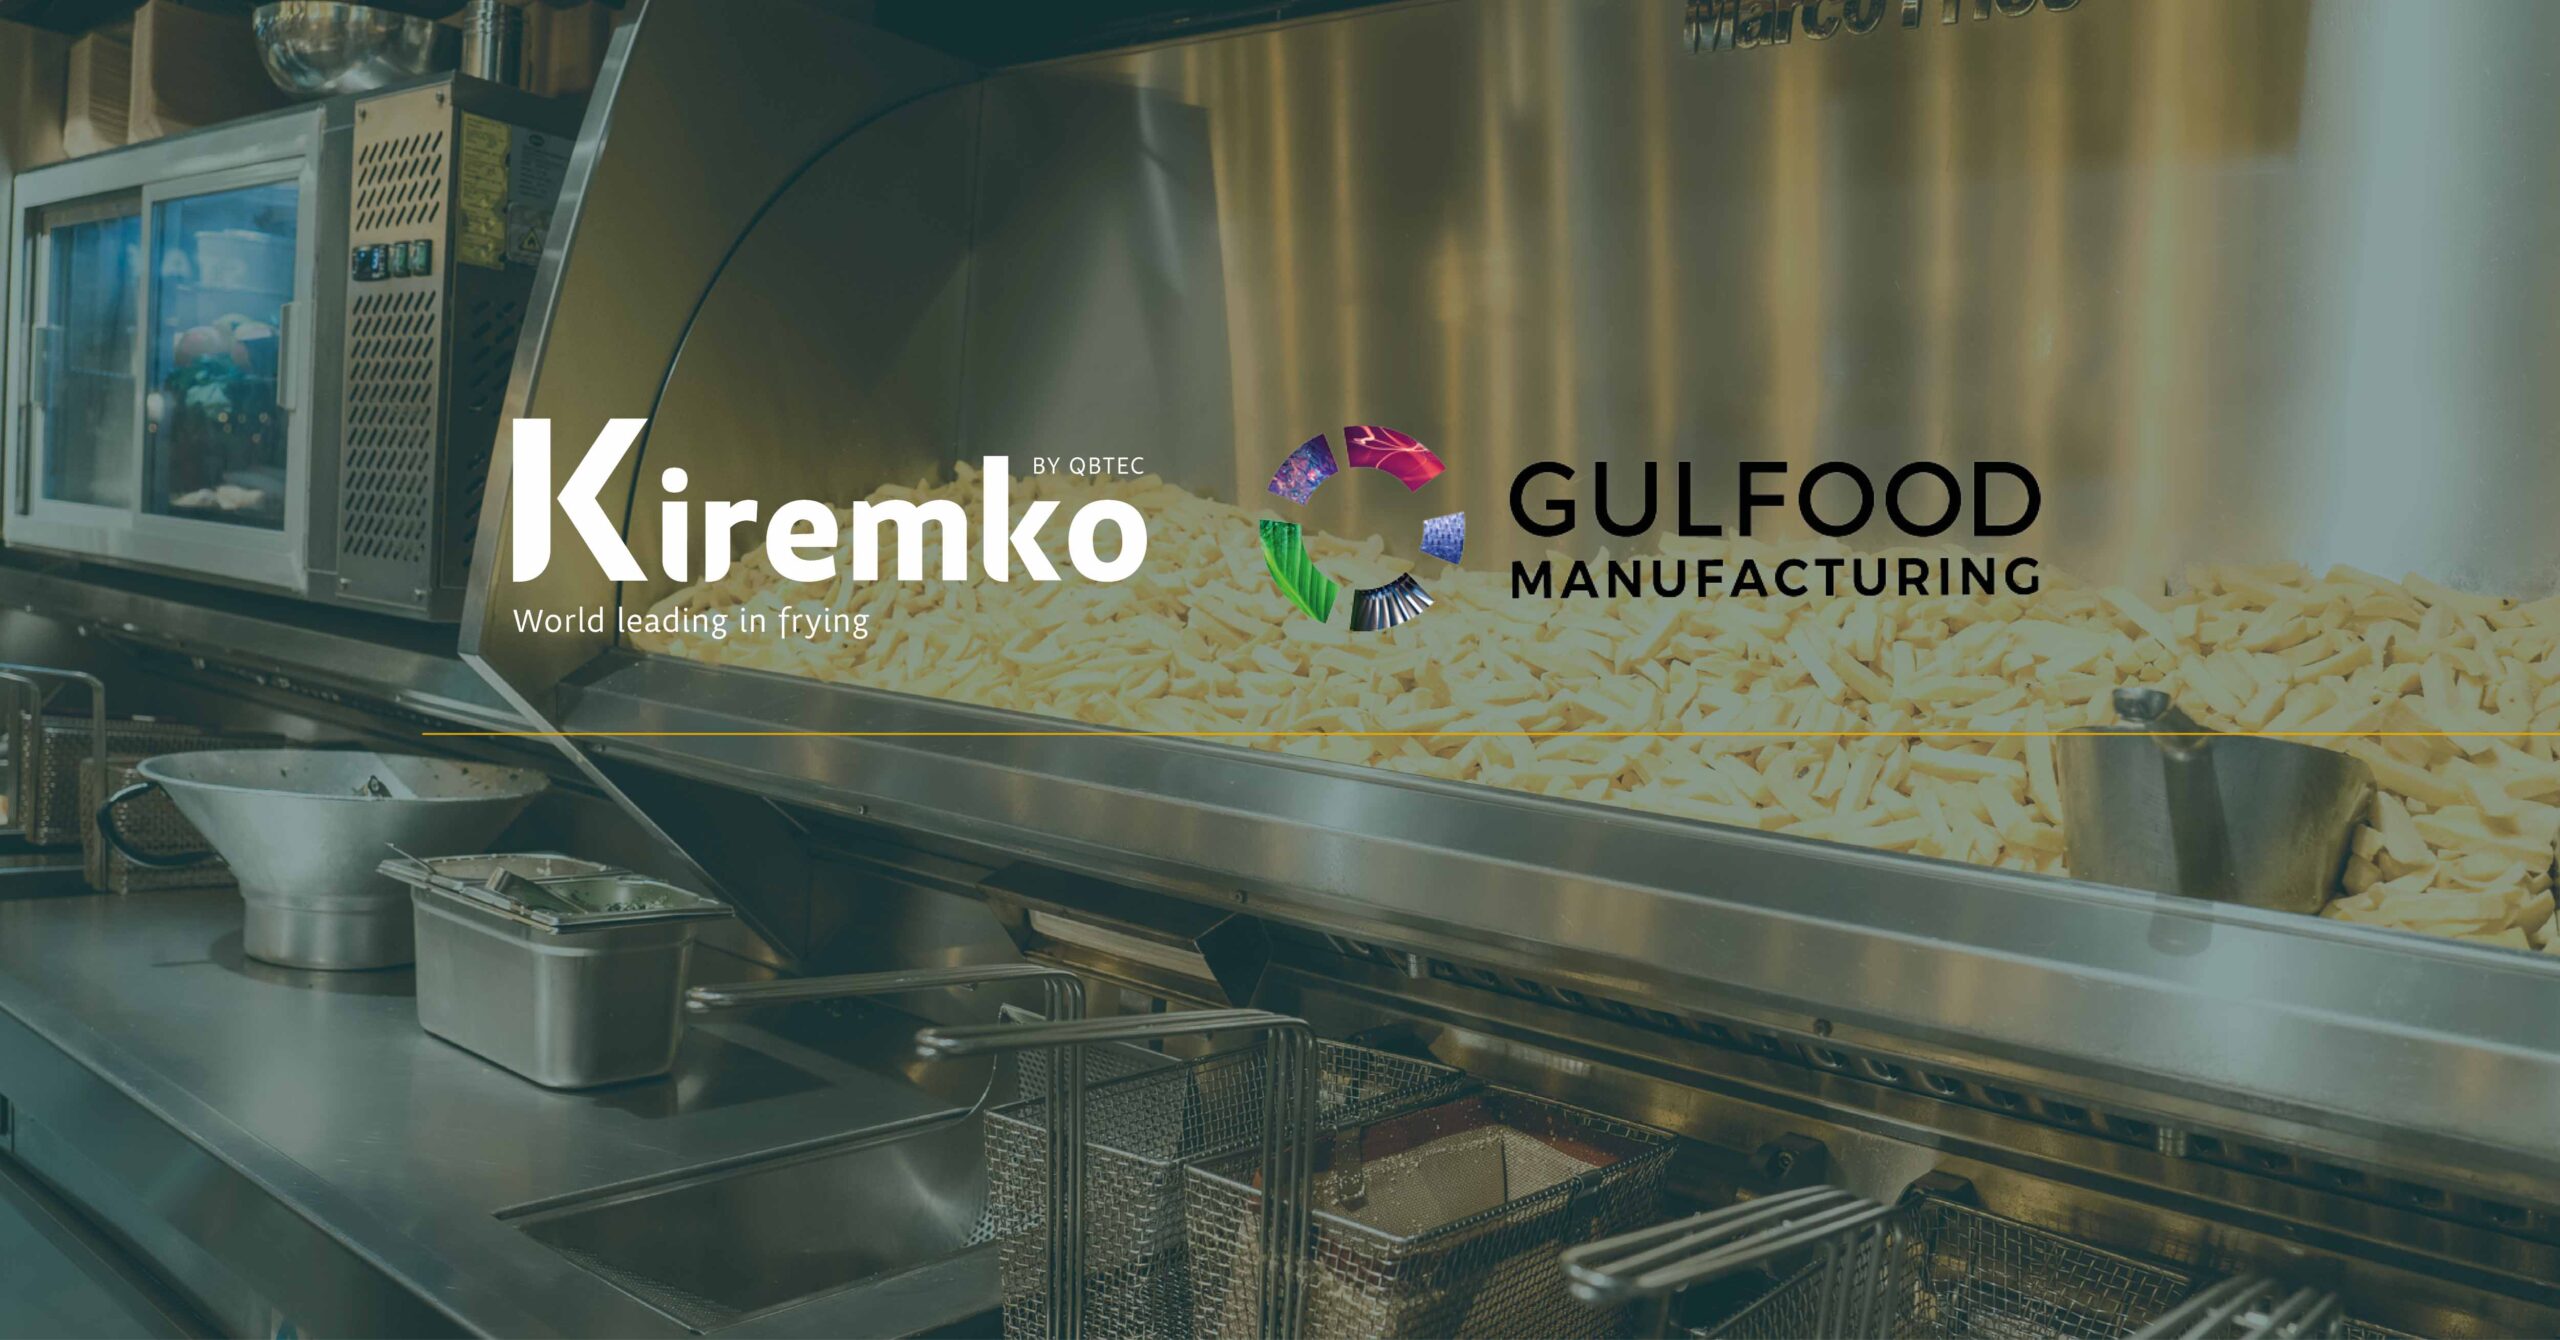 Gulfood Manufacturing Kiremko